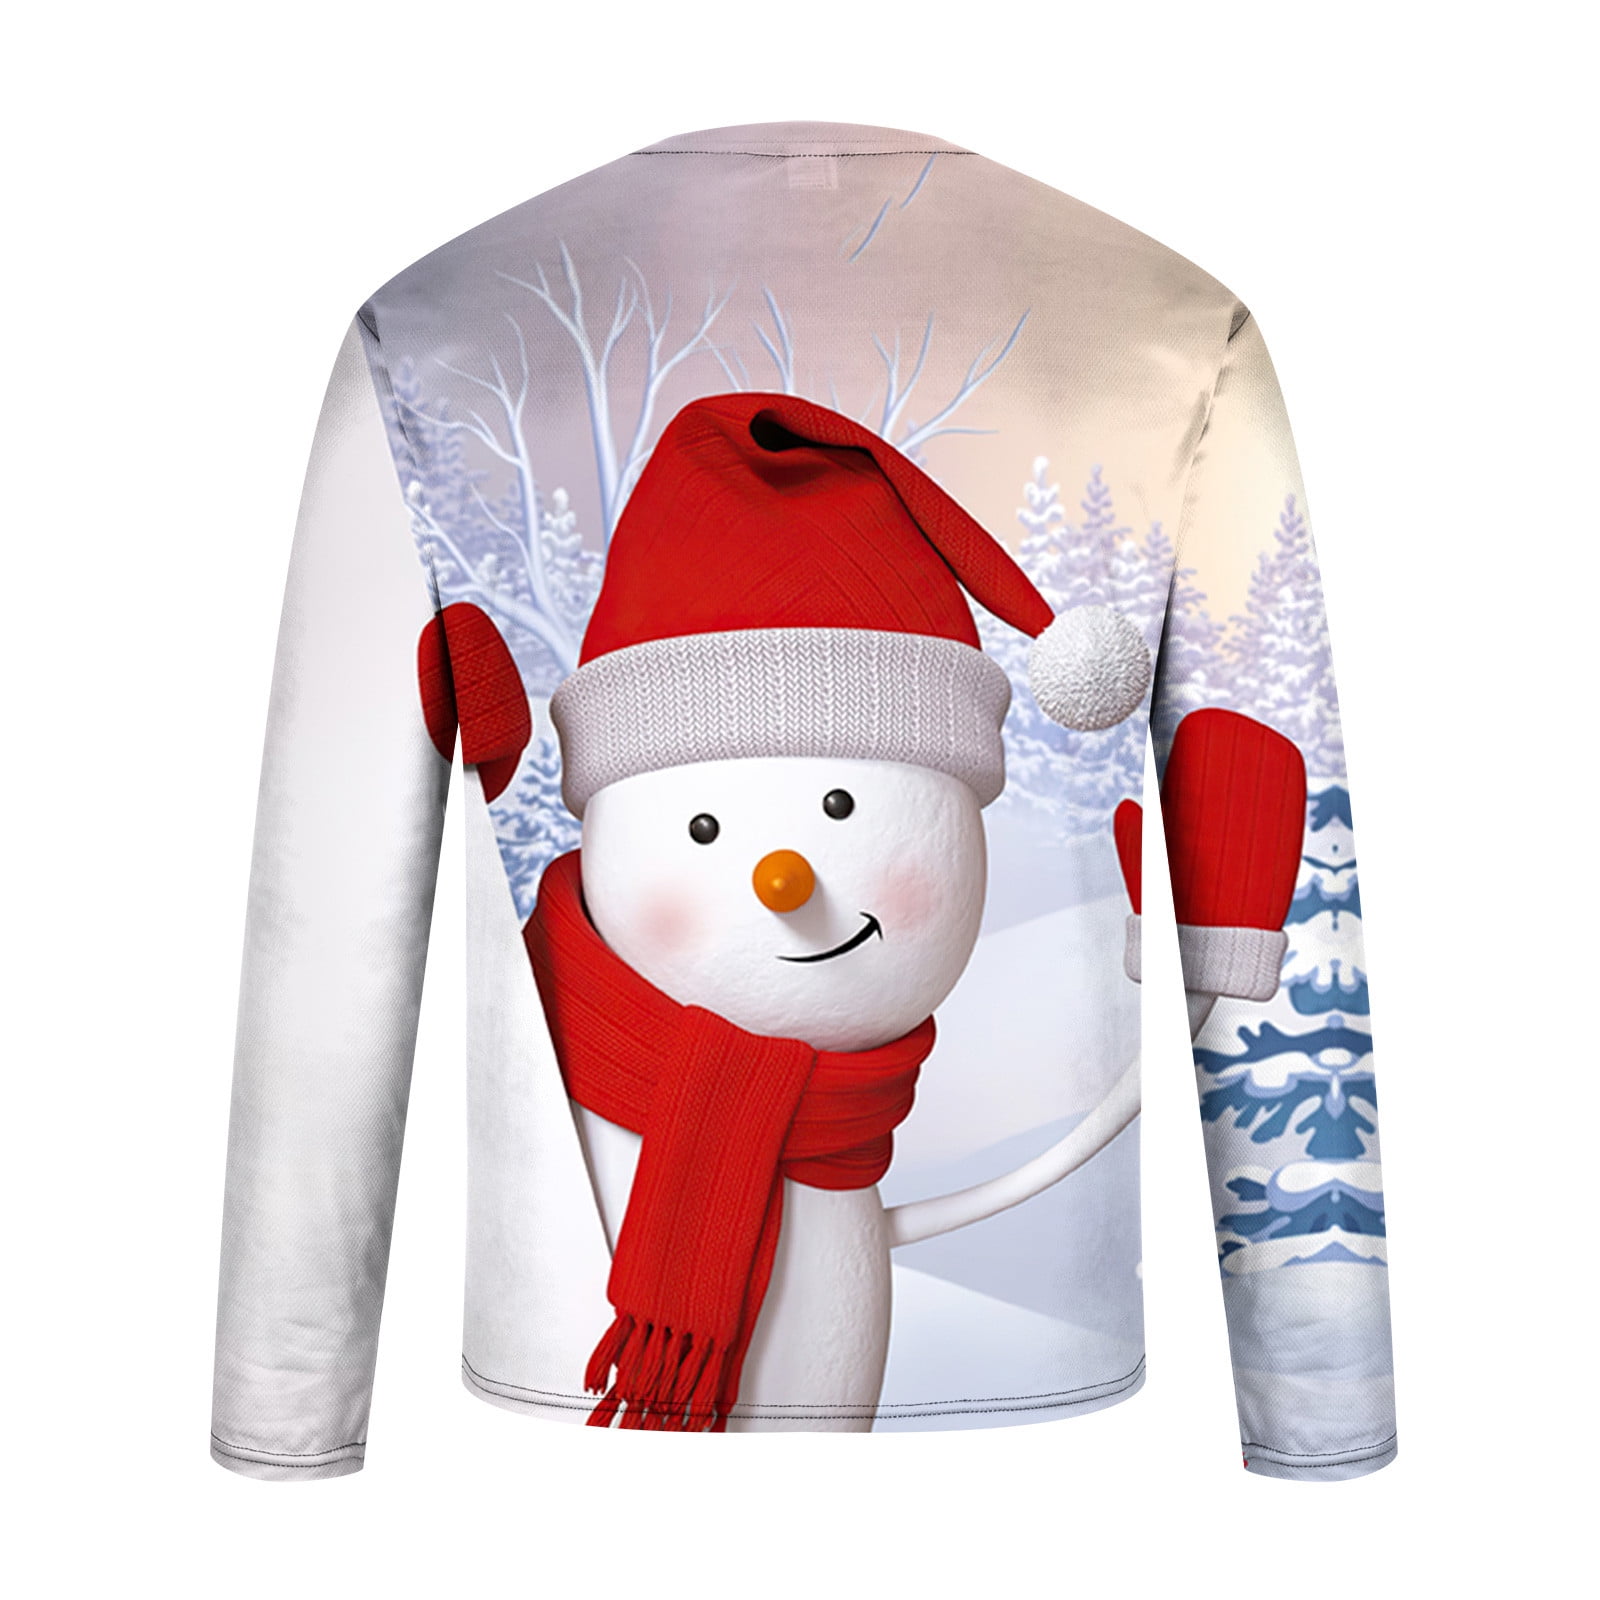 VSSSJ Men Casual Christmas Round Neck Shirts Oversized Fit 3D Snowman Print  Long Sleeve Pullover T-Shirts Fashion Lightweight Bottoming Shirt Red XXXXL  